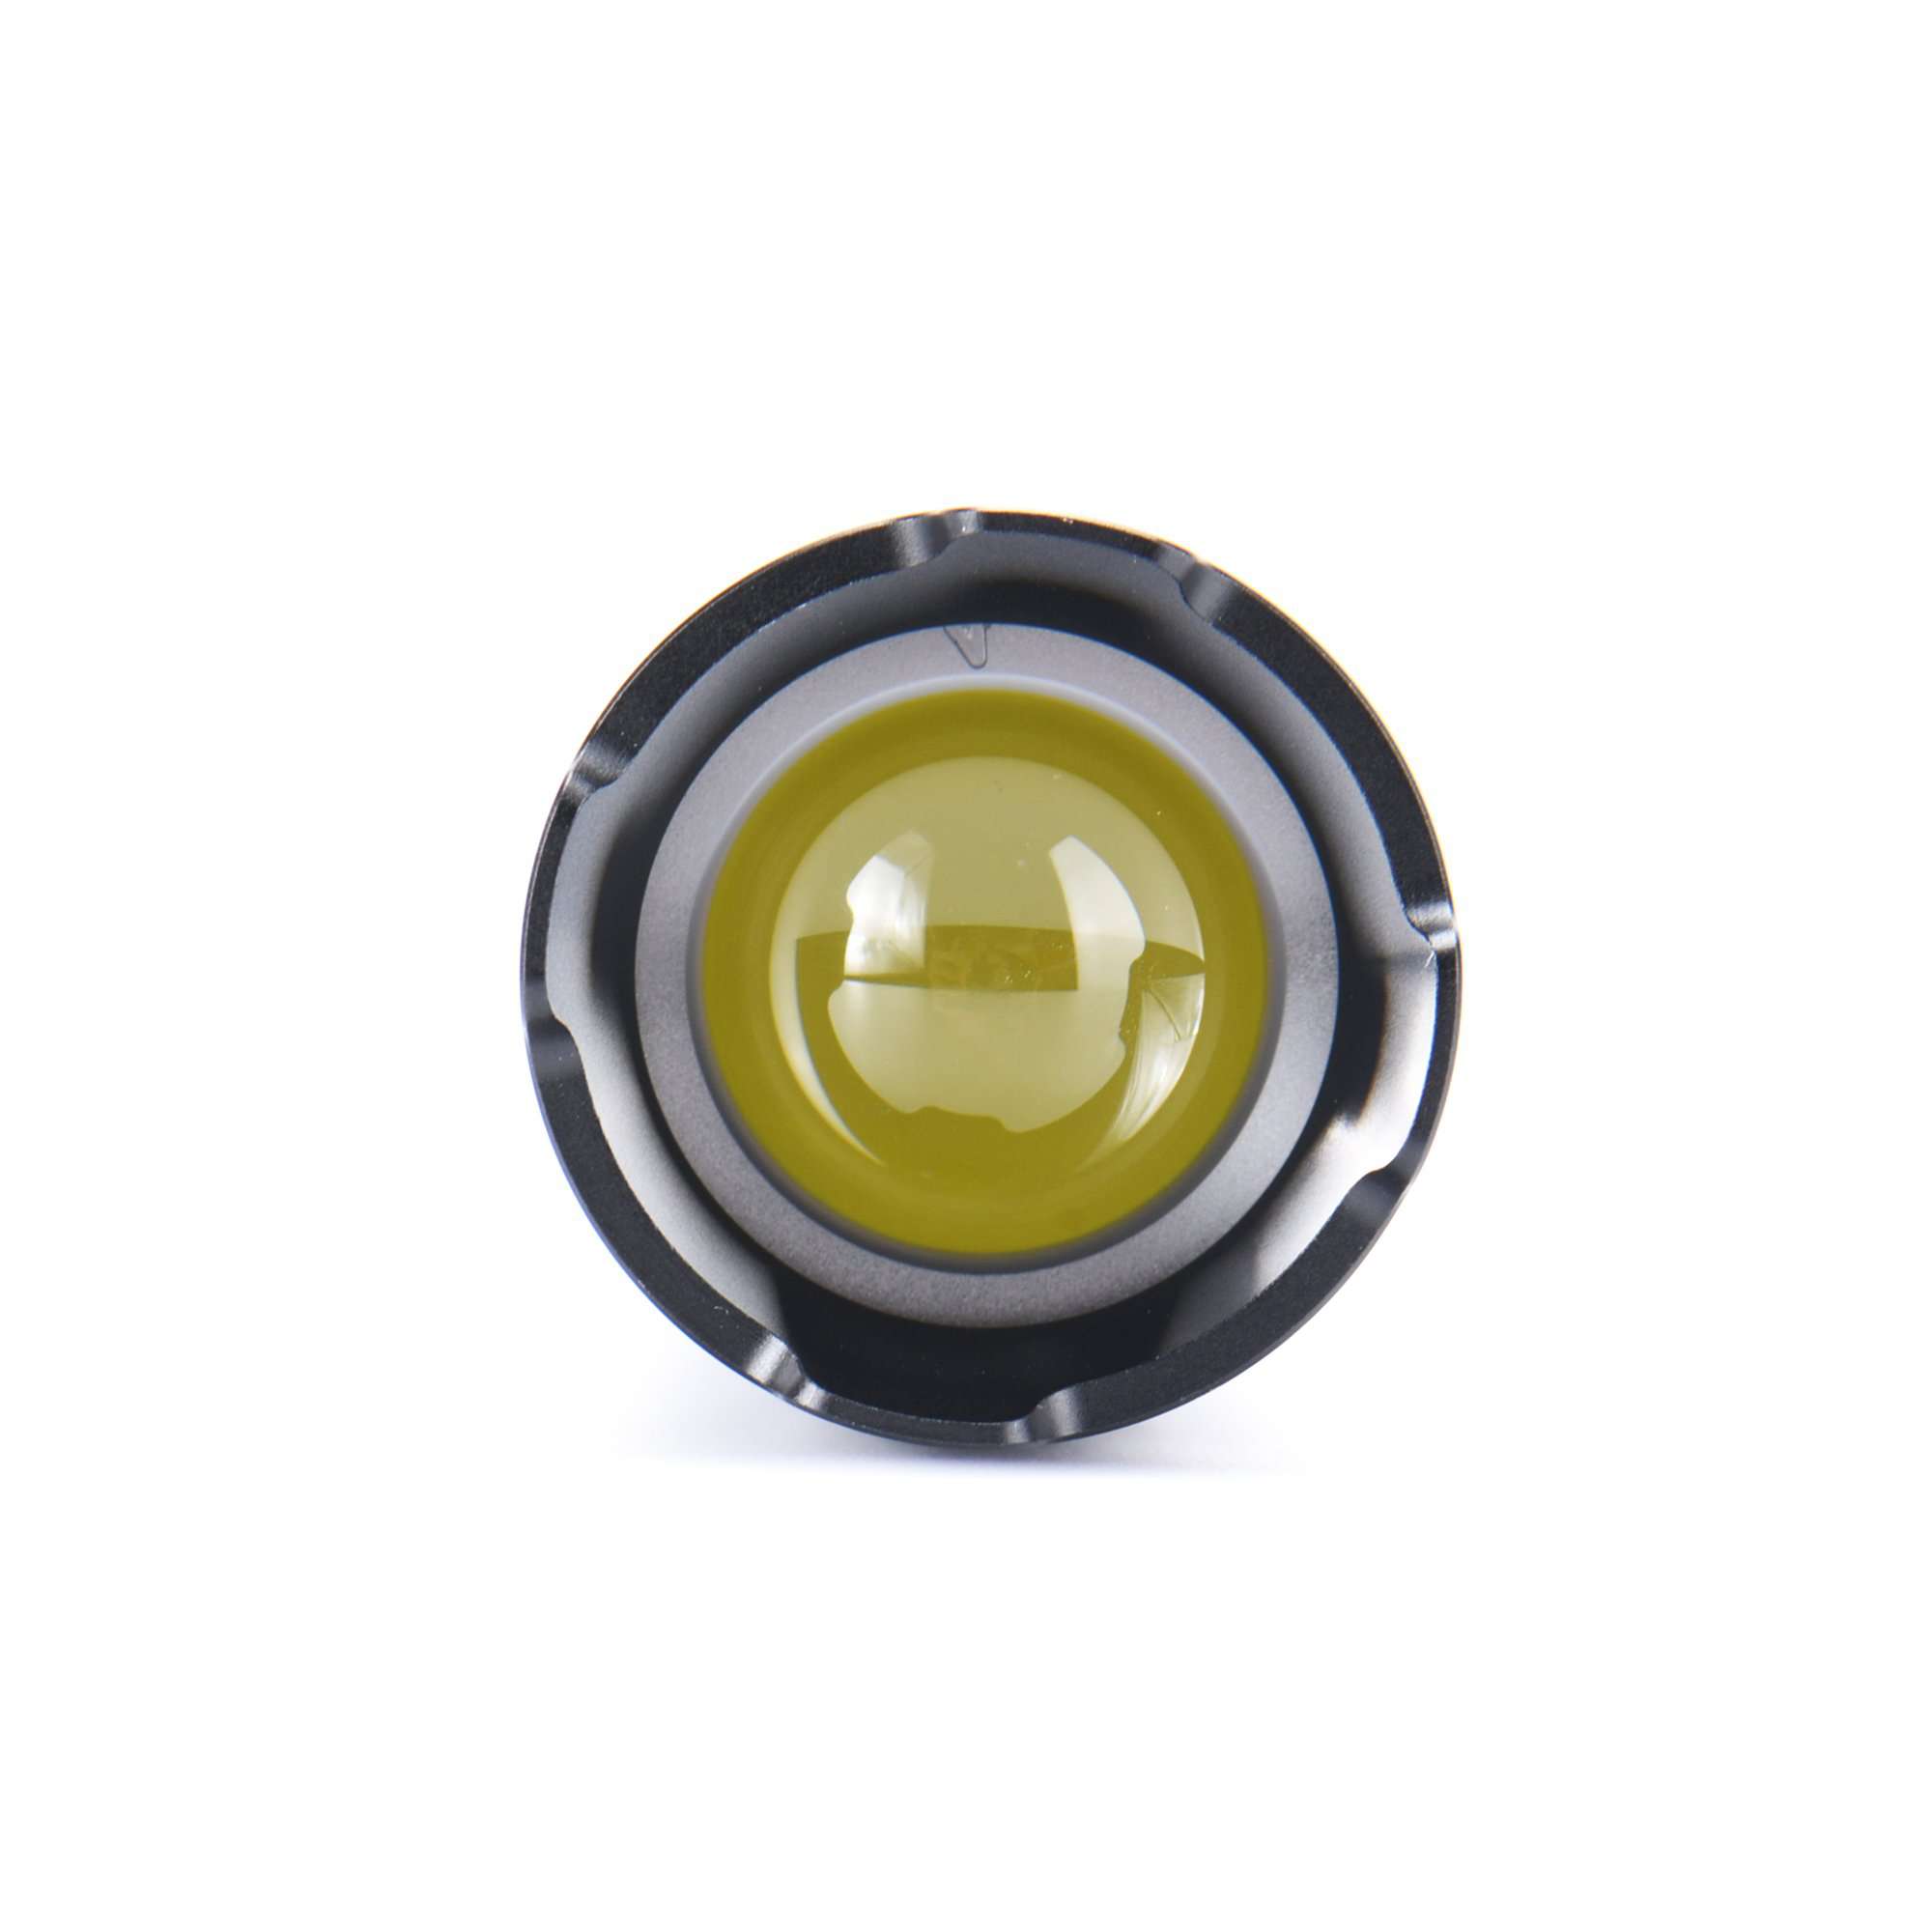 LT35 Pro Best Zoomable LED Flashlight - 1200 Lumens